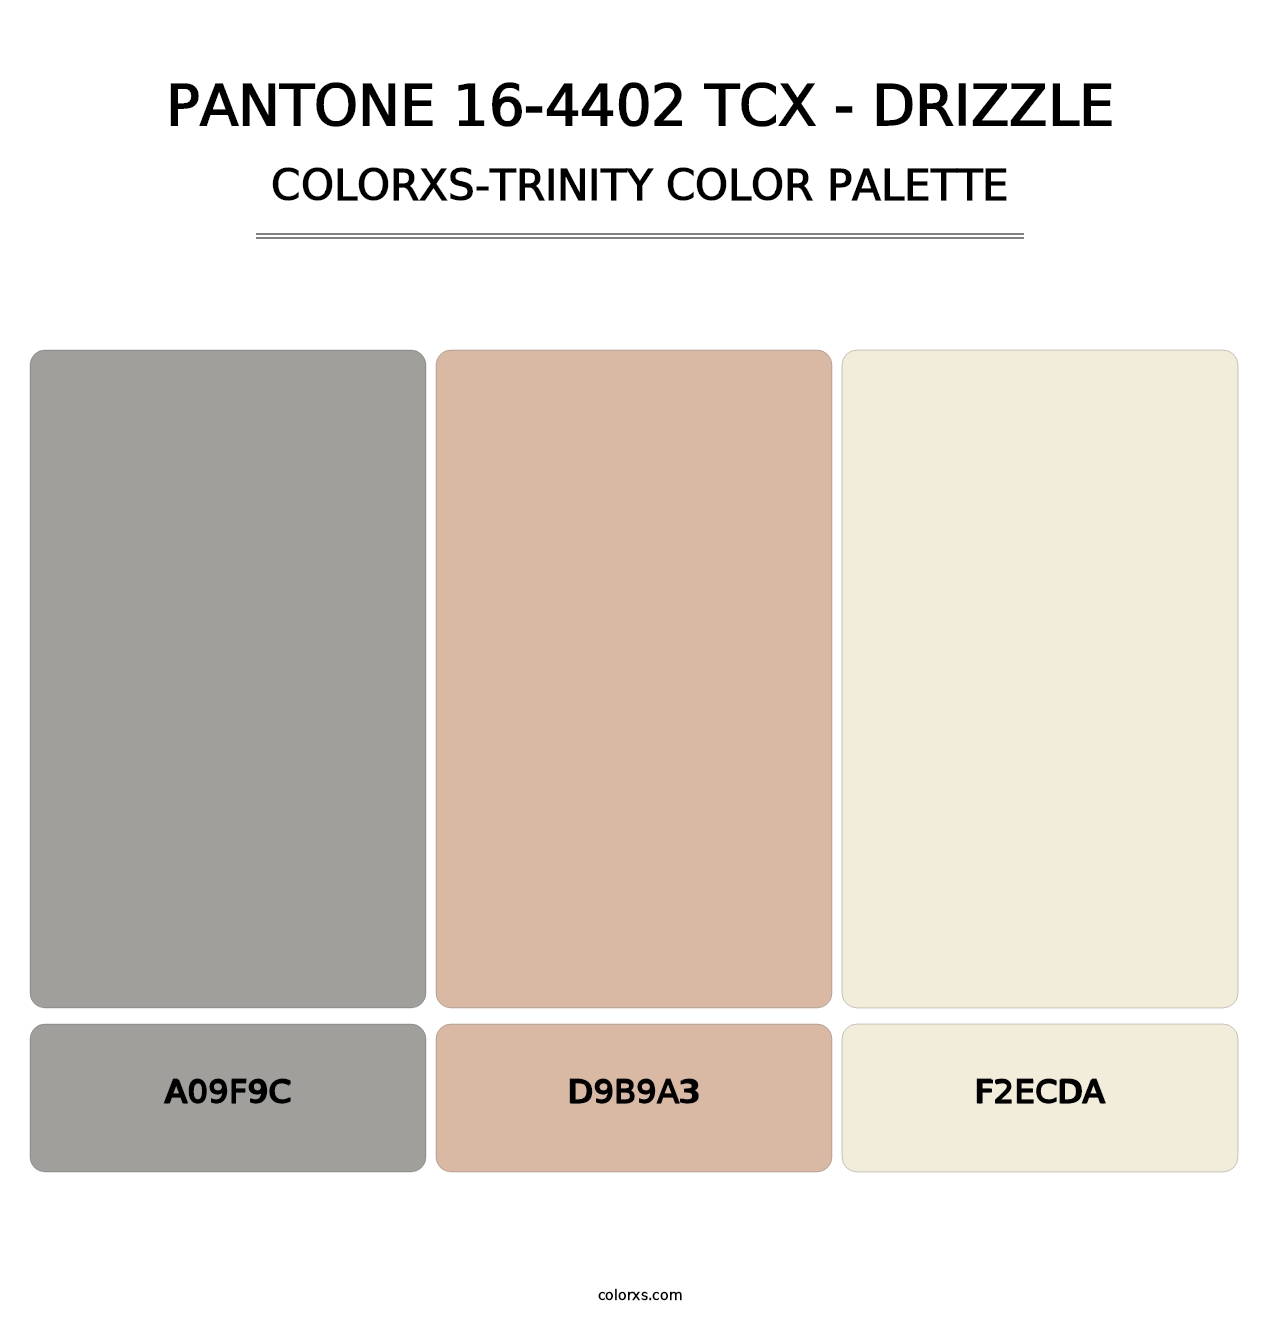 PANTONE 16-4402 TCX - Drizzle - Colorxs Trinity Palette